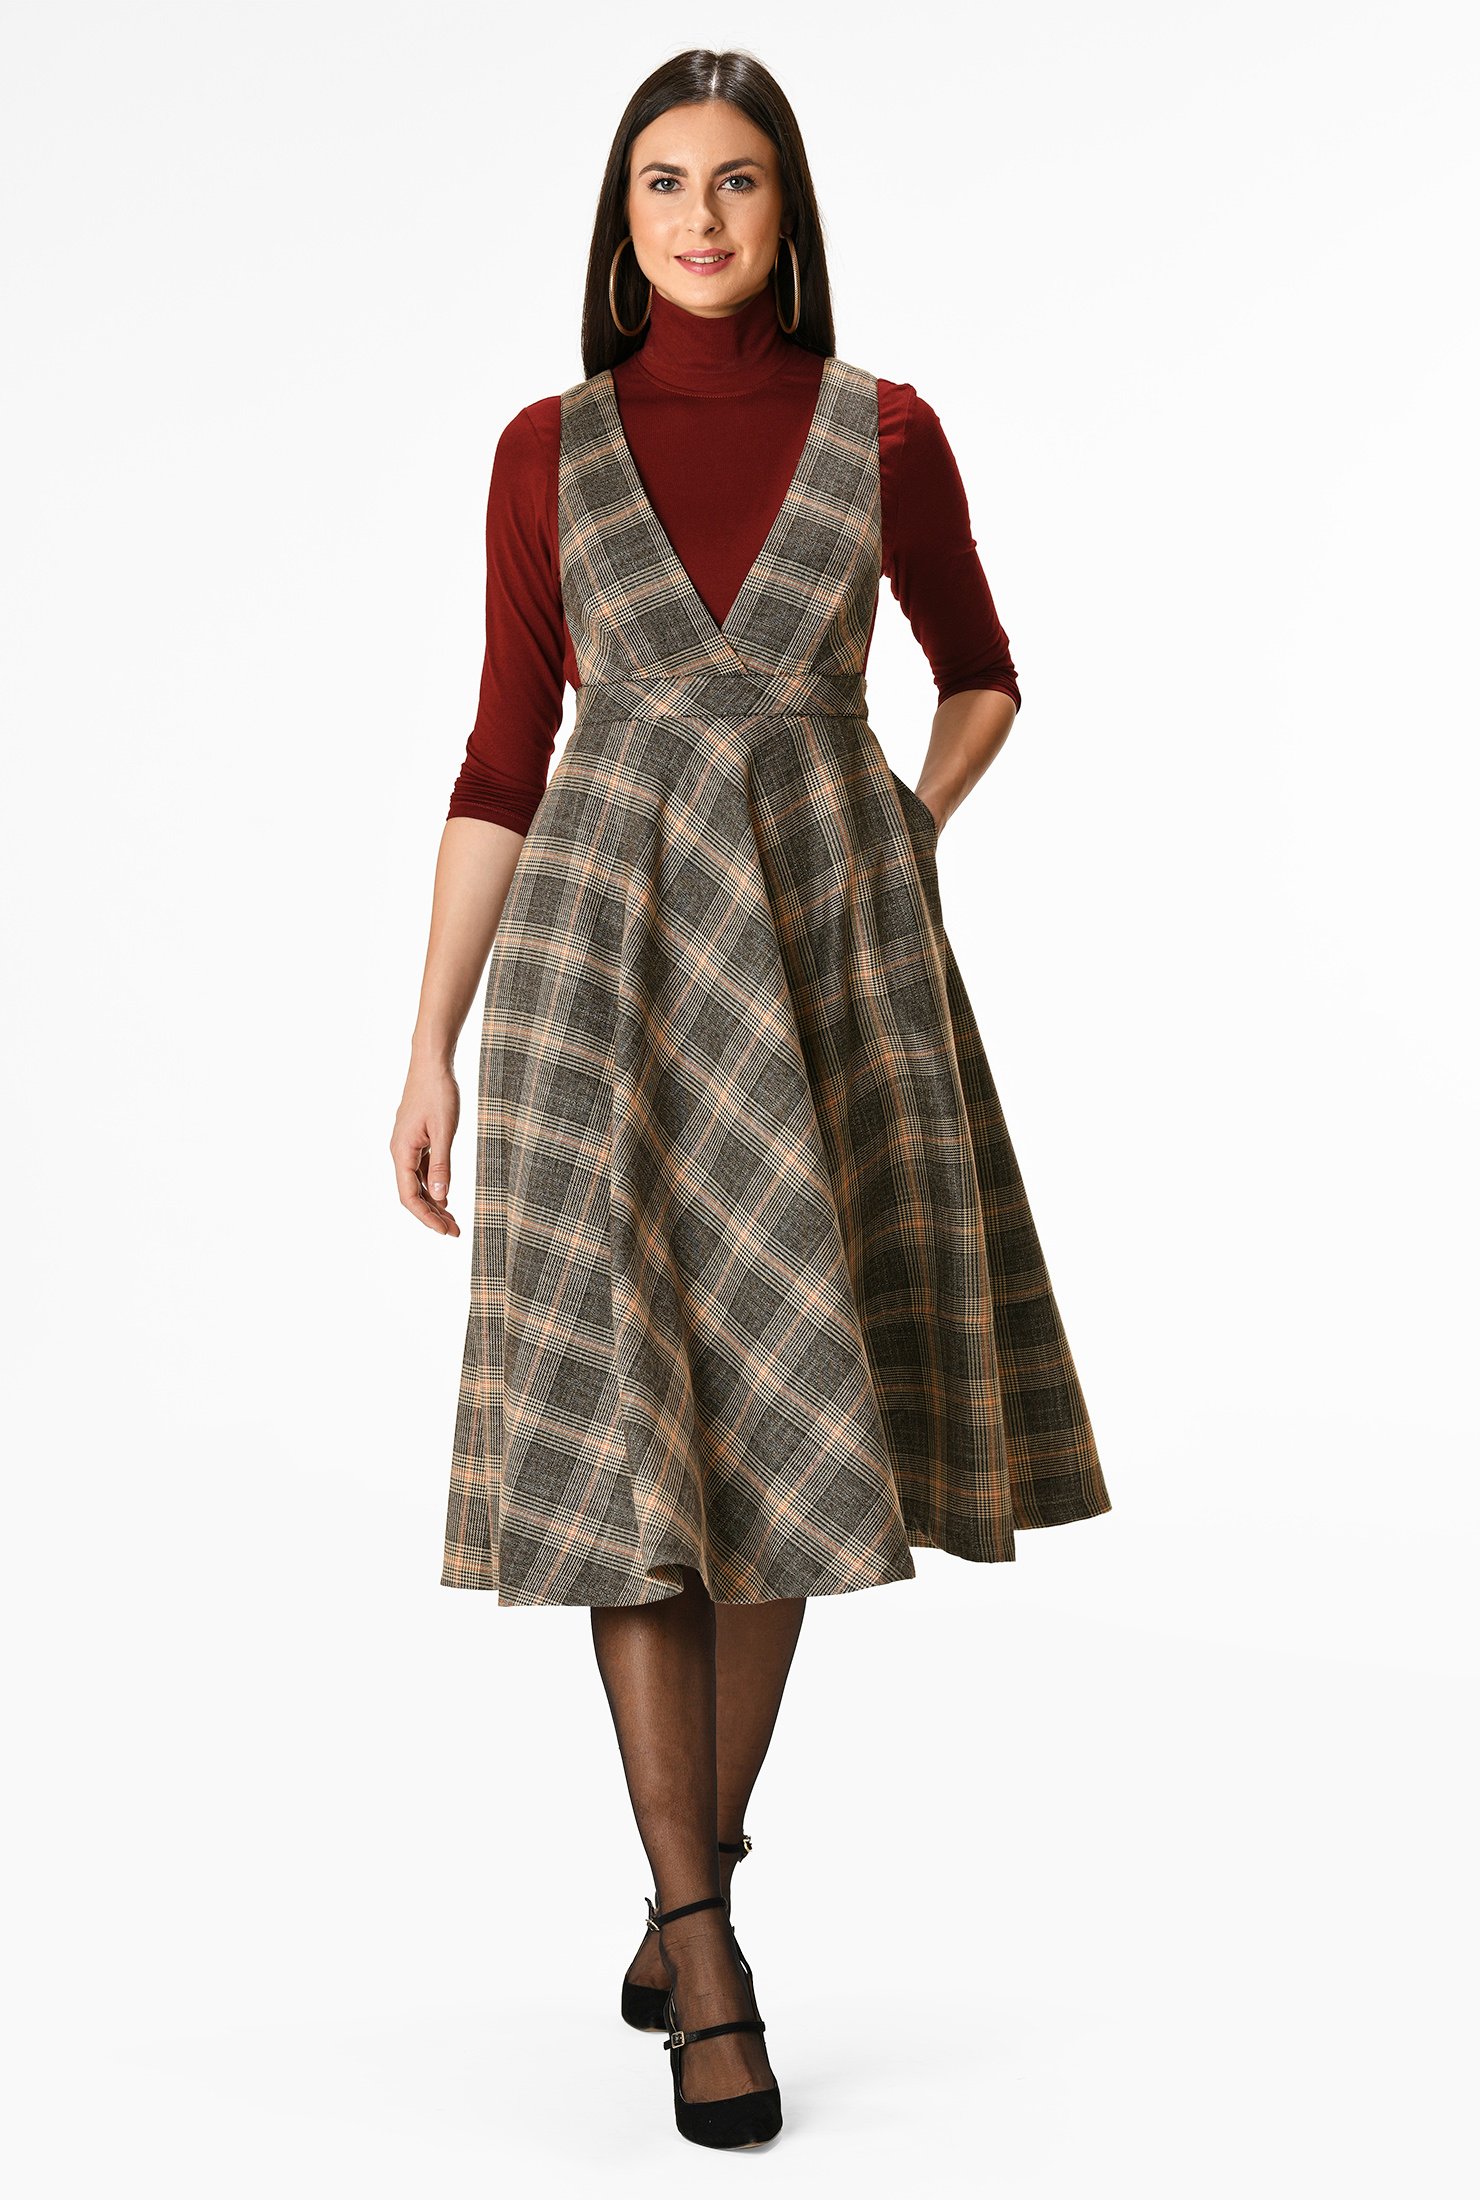 select jumper dress